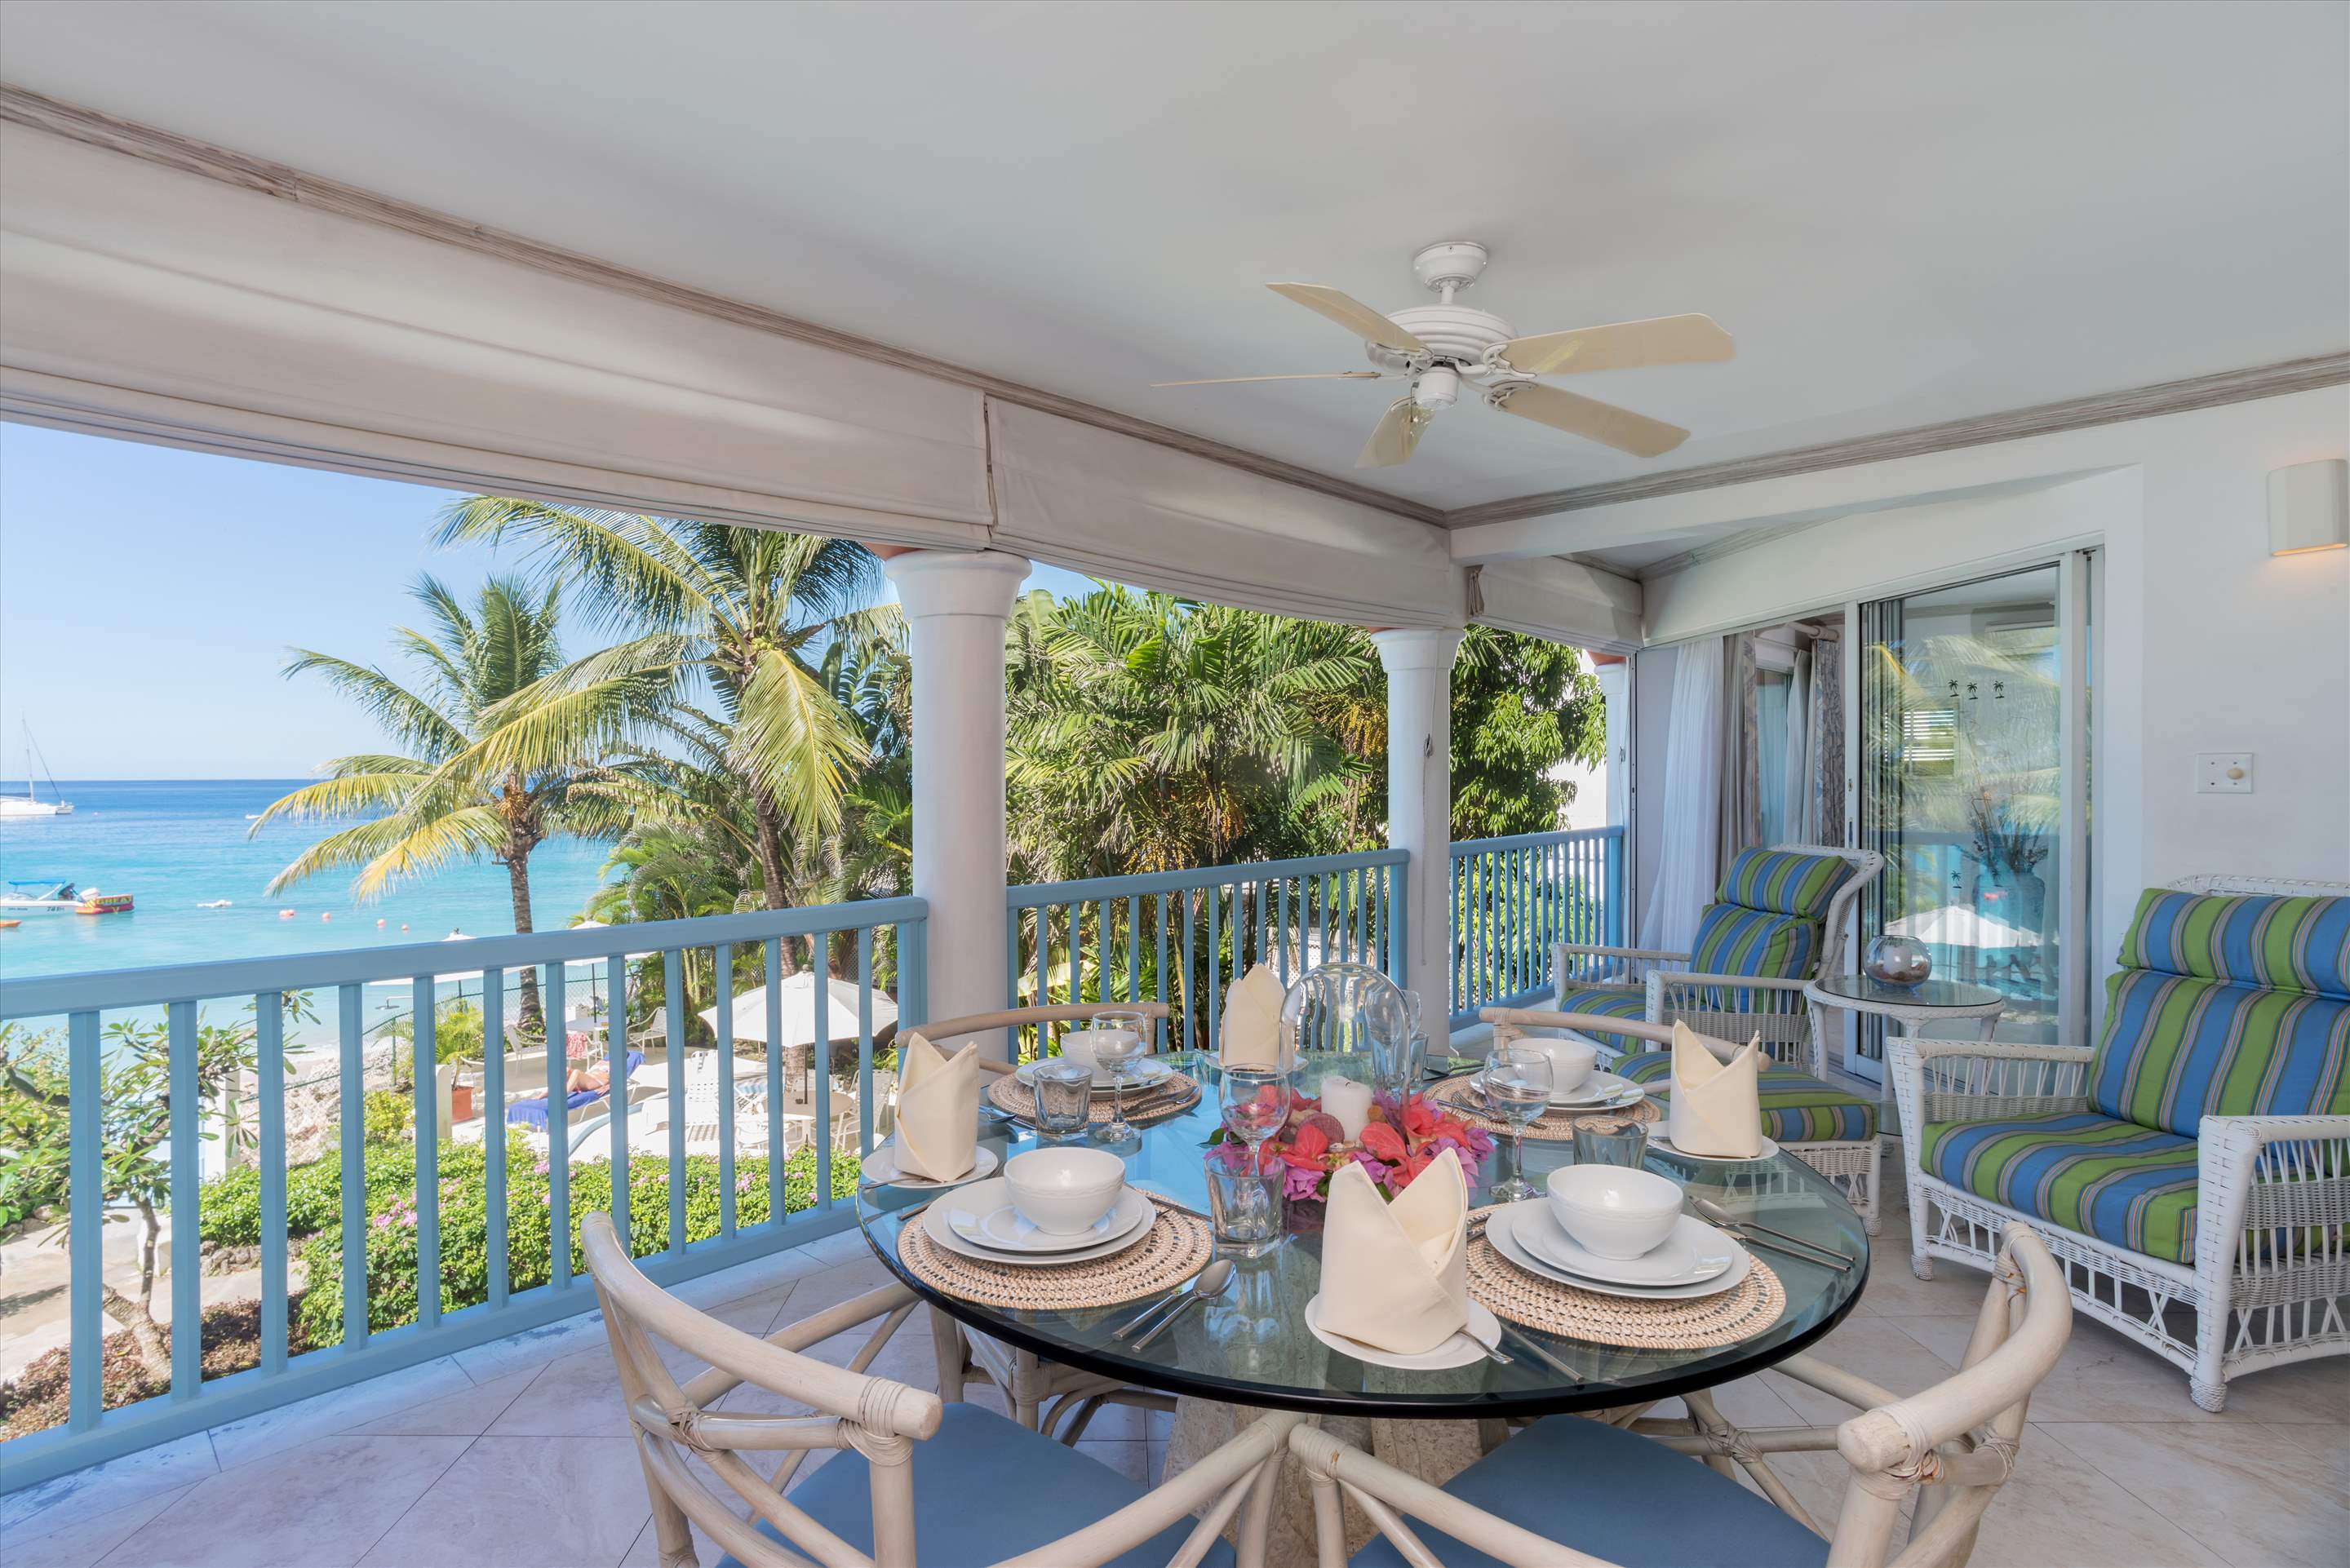 Villas on the Beach 205, 1 bedroom, 1 bedroom apartment in St. James & West Coast, Barbados Photo #3